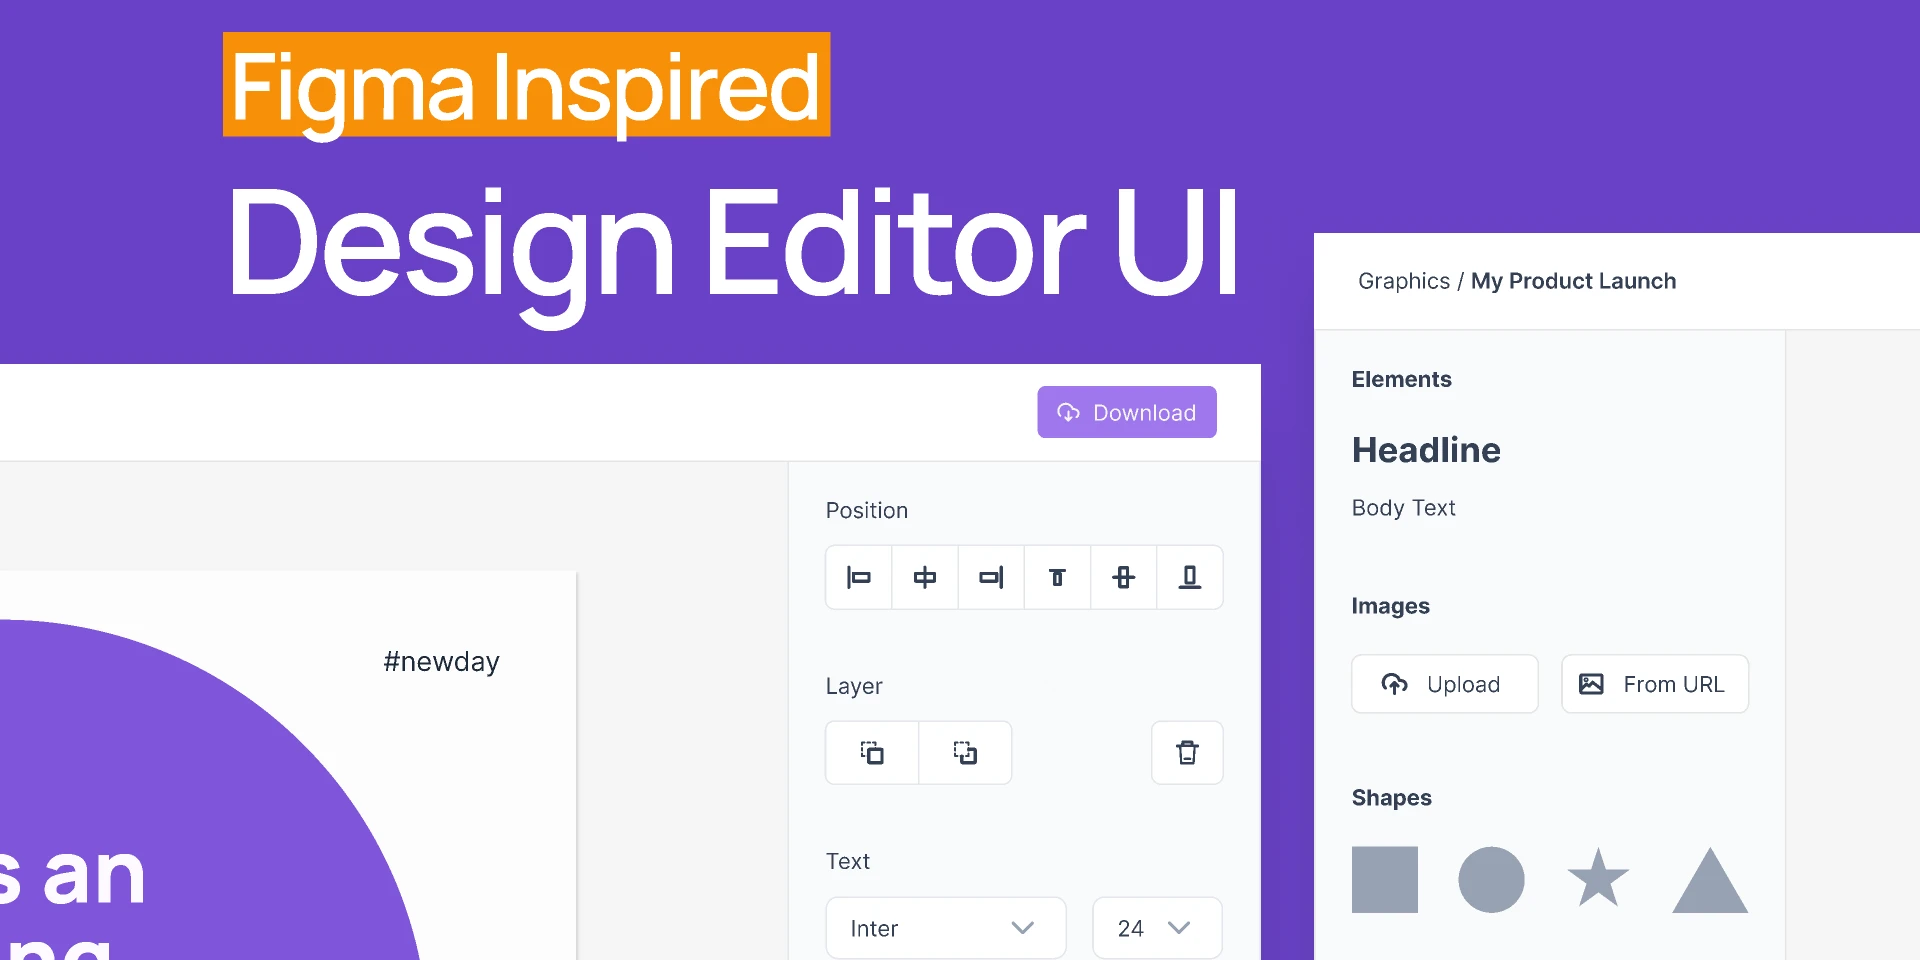 Design Editor UI Design for Figma and Adobe XD